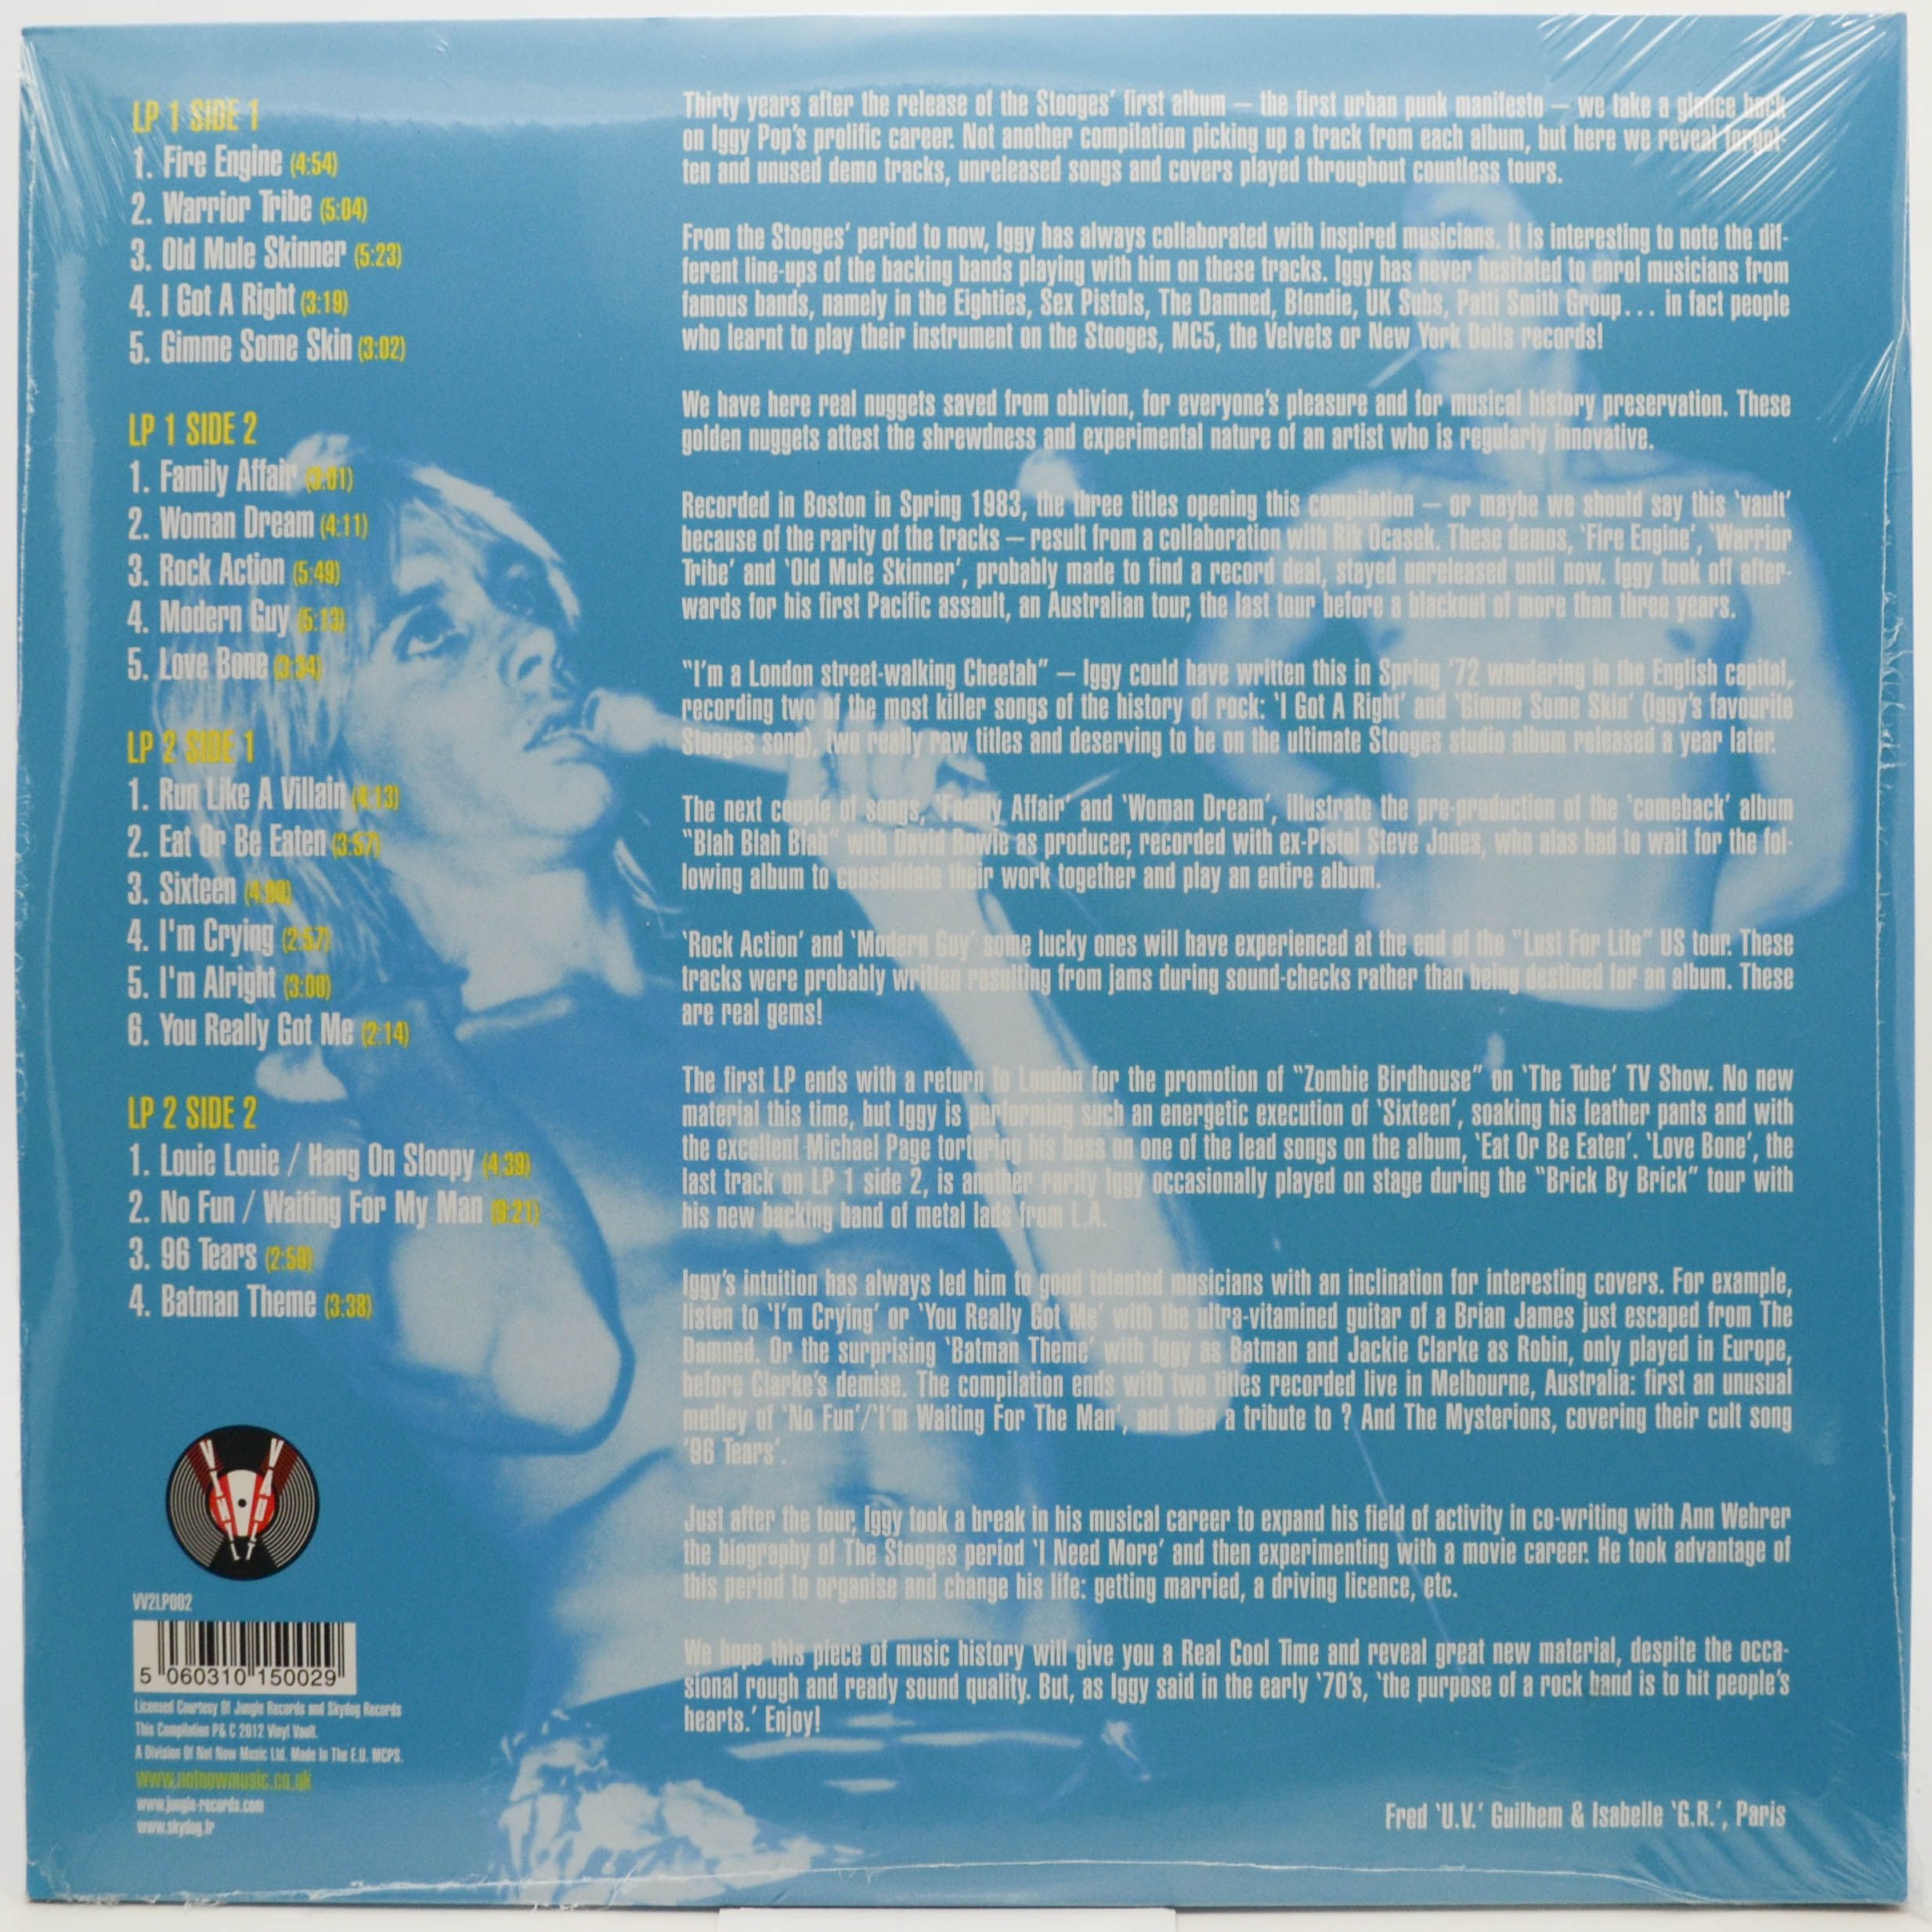 Iggy Pop — Rock Action "20 Iggy Nuggets" (2LP, UK), 1999